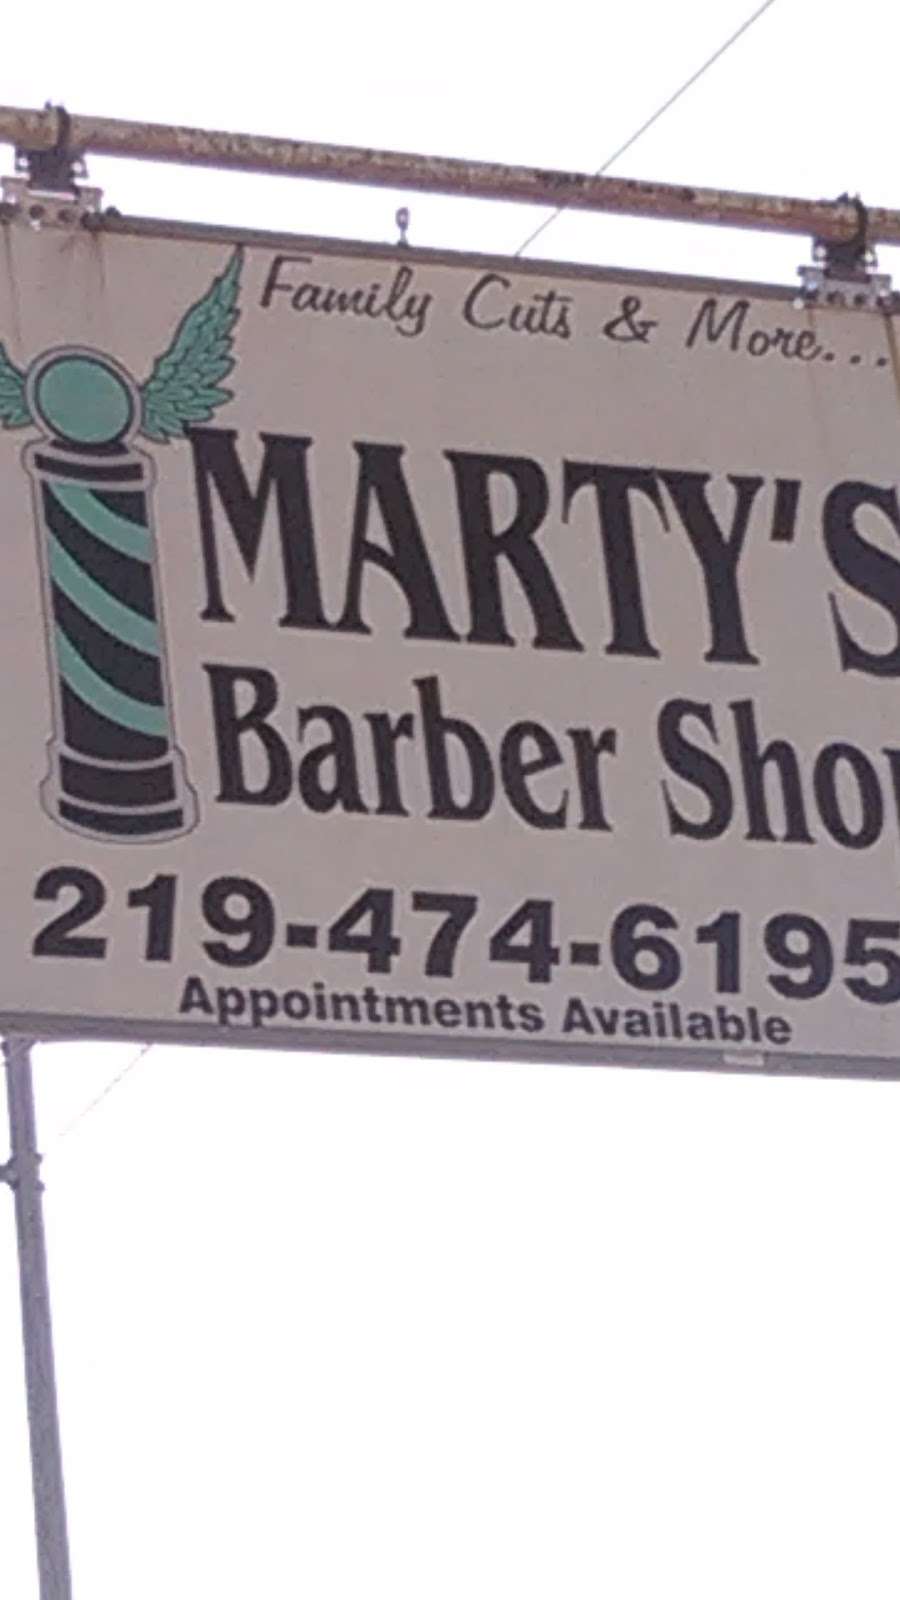 Smittys Barber Shop | 109 N 3rd St, Kentland, IN 47951 | Phone: (219) 474-6195